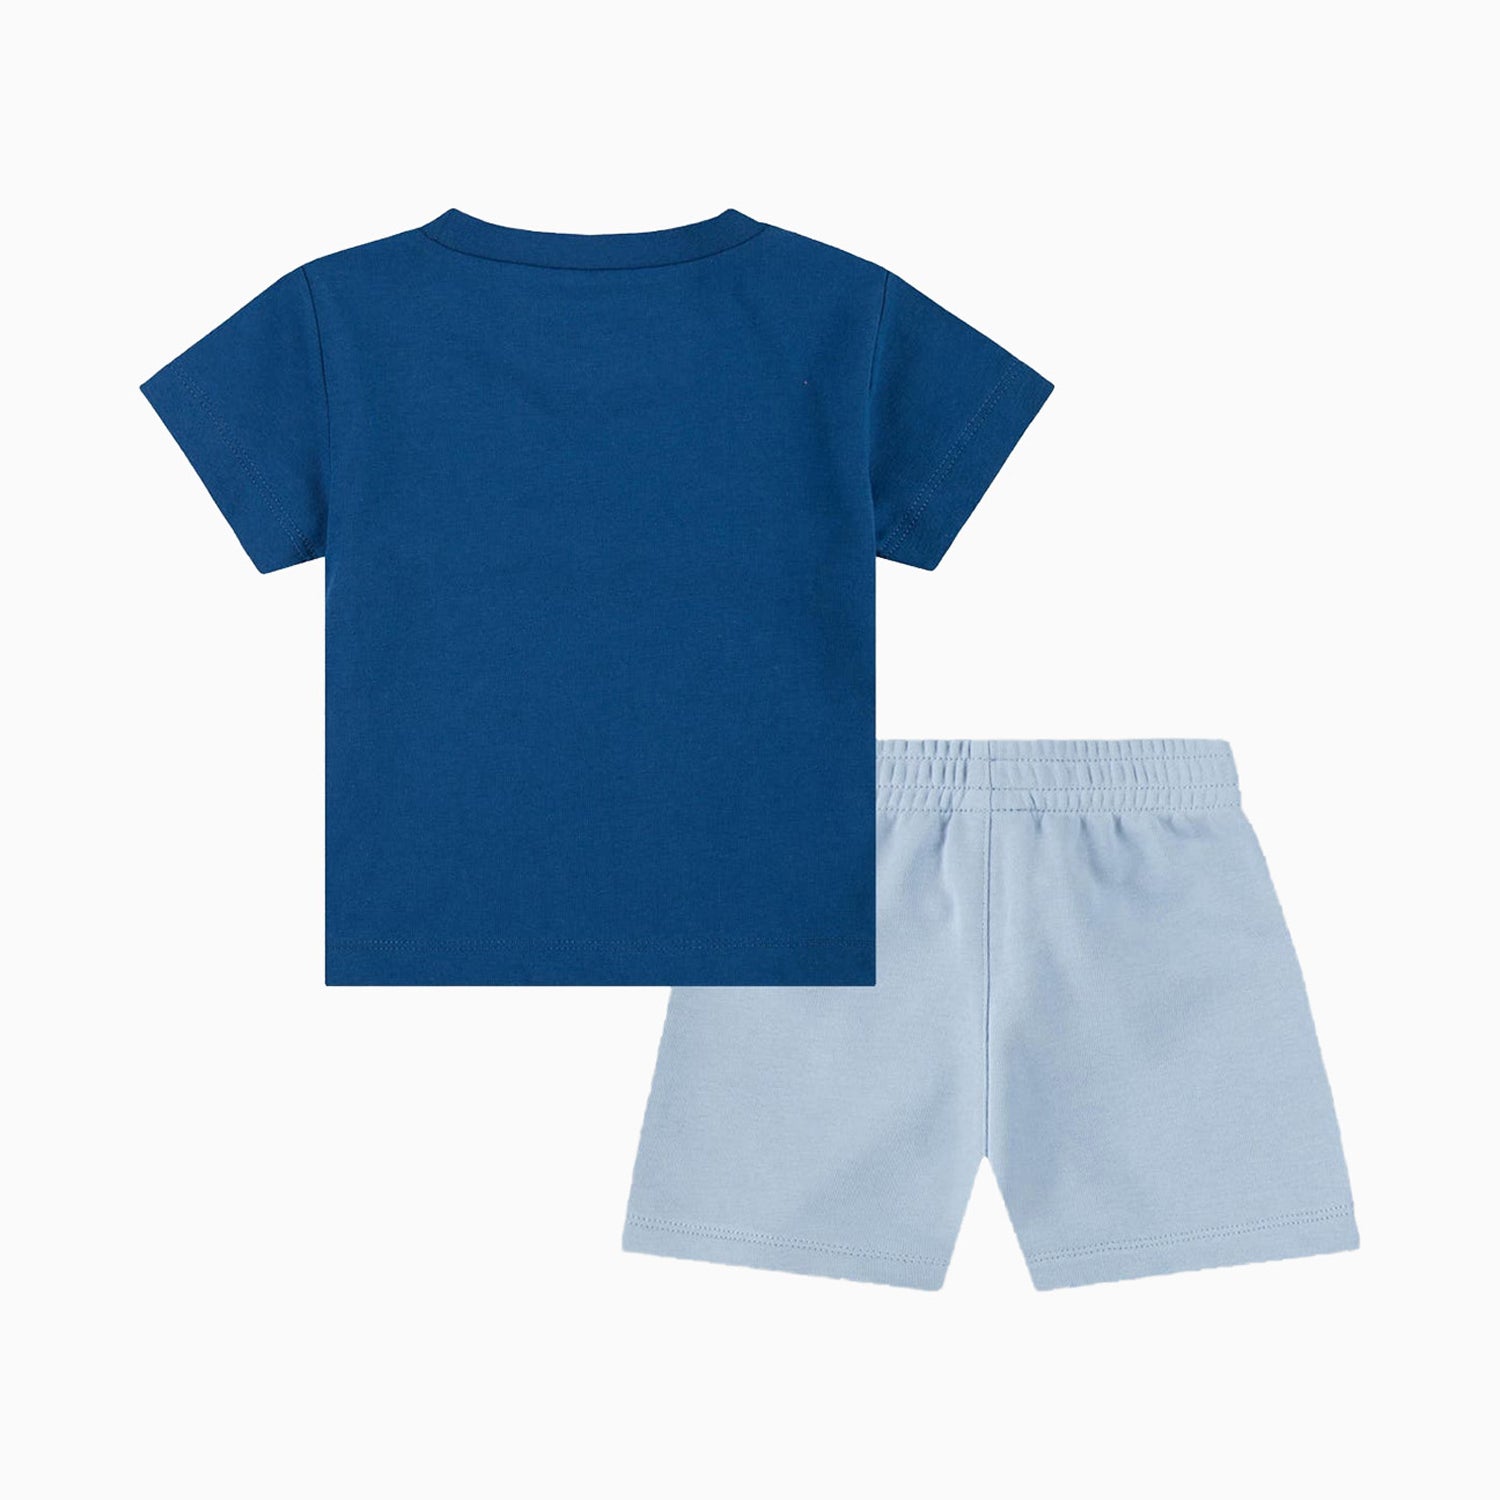 nike-kids-sportswear-club-graphic-t-shirt-and-shorts-set-outfit-86l775-u1w